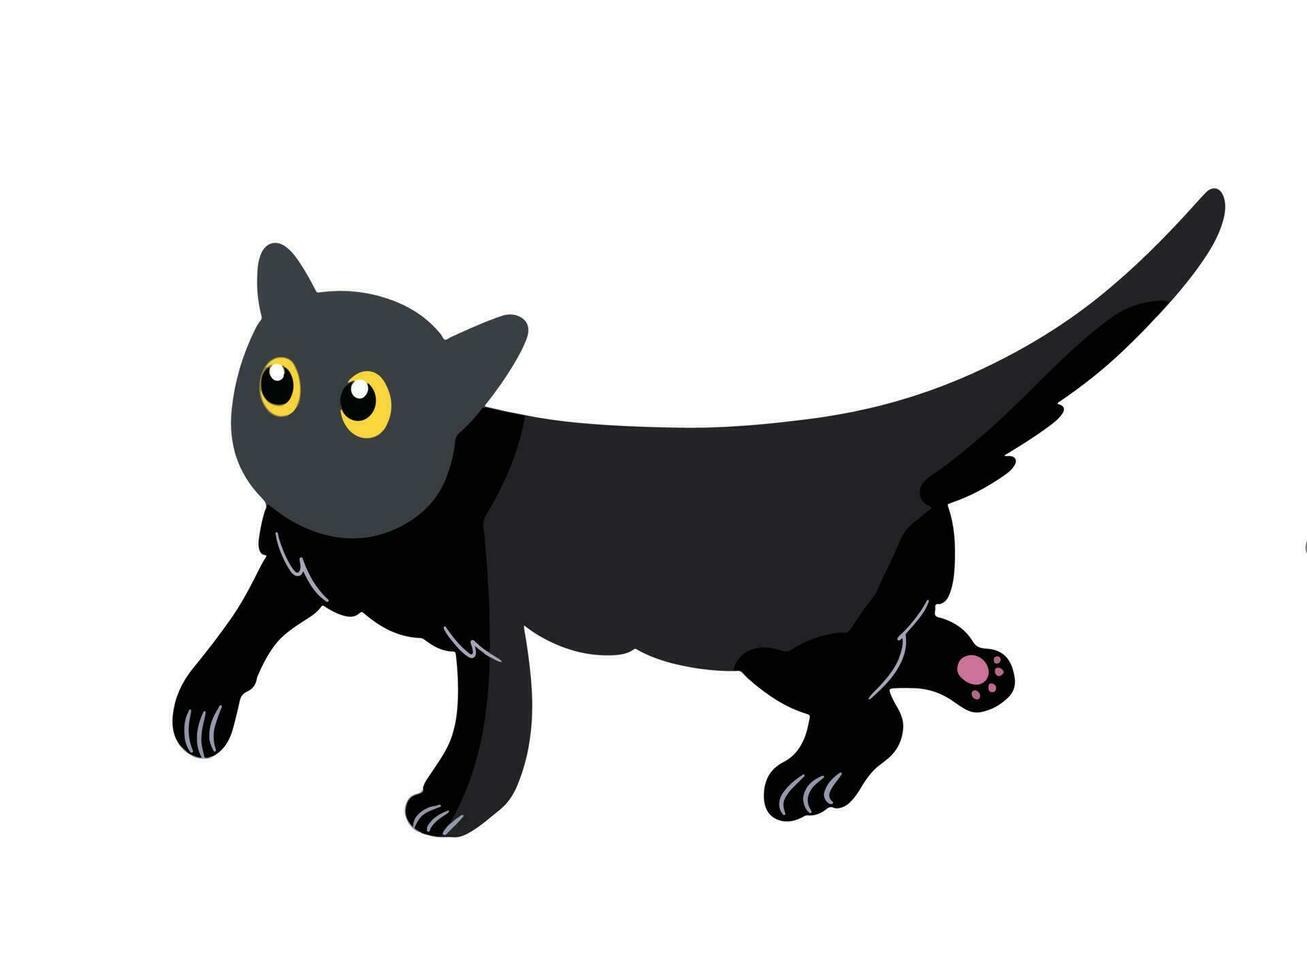 linda caminando negro gato con amarillo ojos vector ilustración aislado en horizontal blanco antecedentes. sencillo y plano Arte estilizado dibujo. kawaii mascota o animal ilustración.